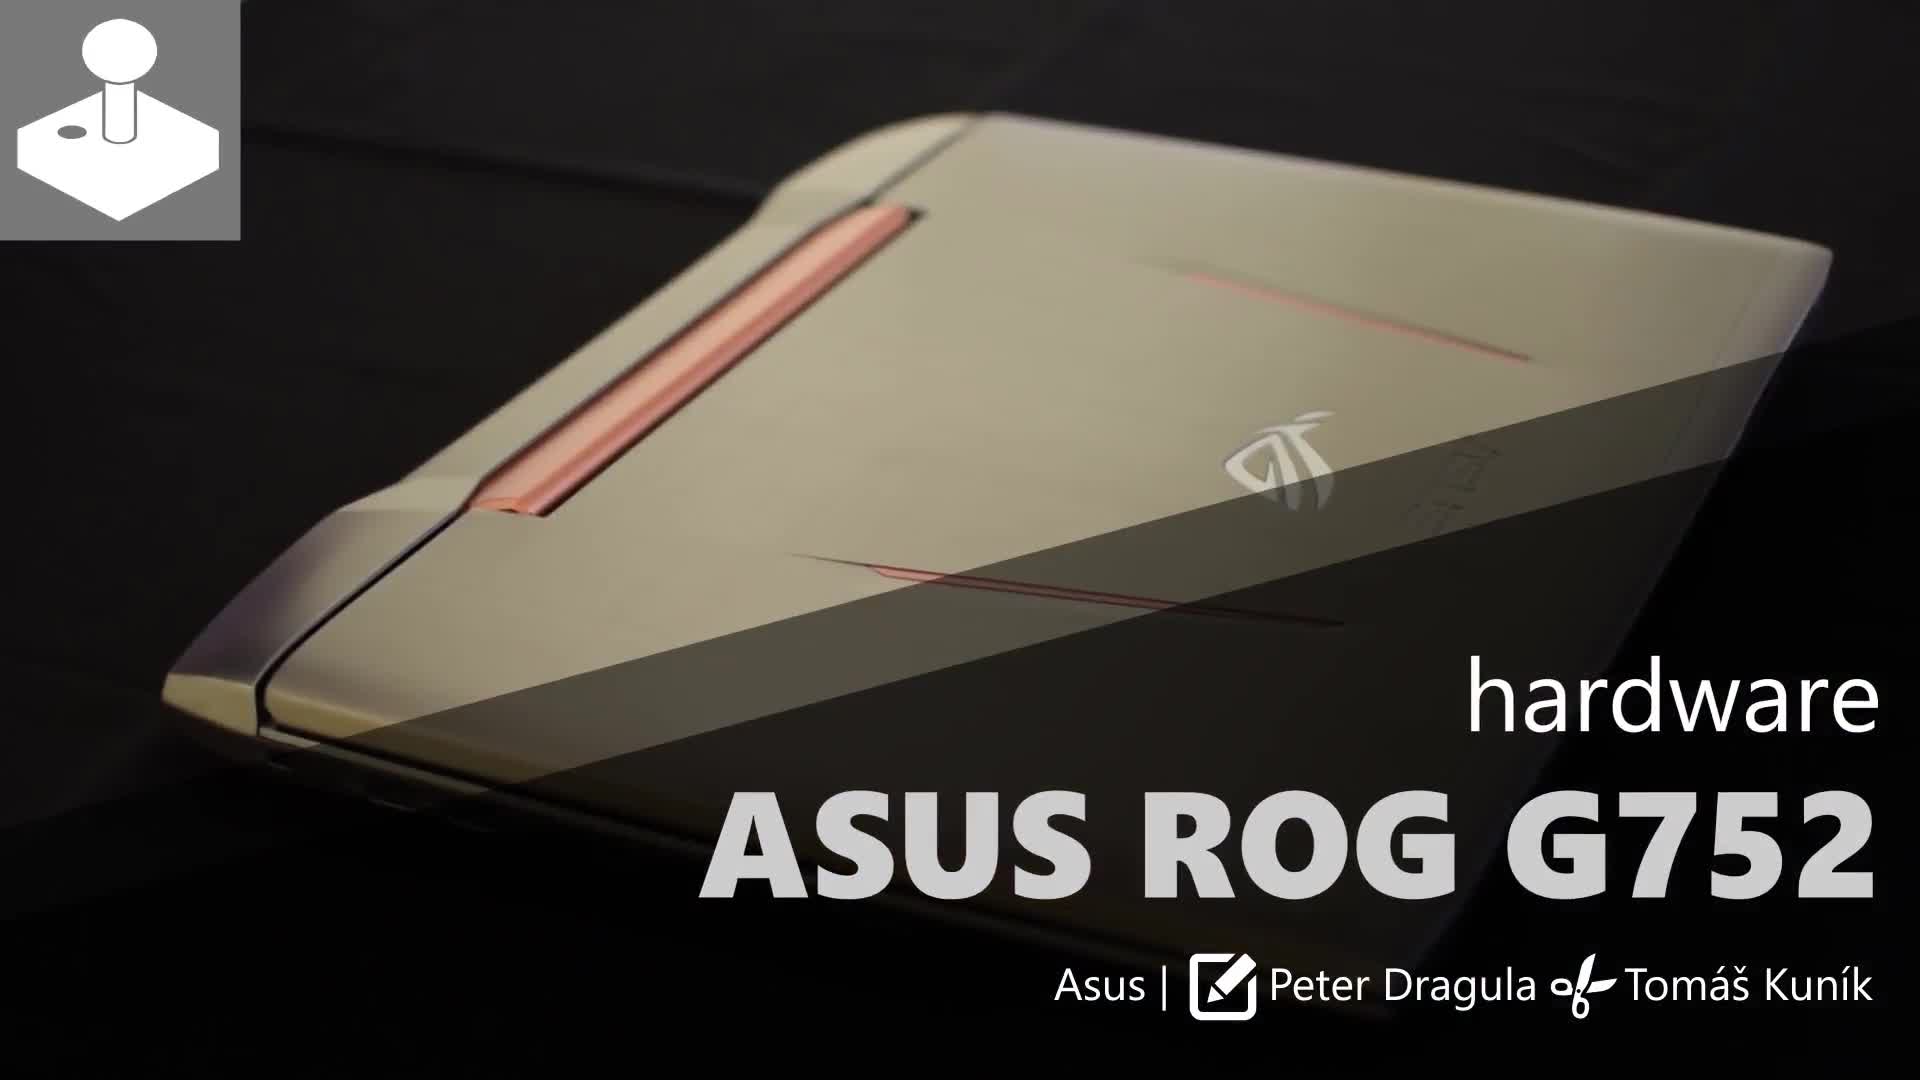 Asus ROG G752 - videopohad